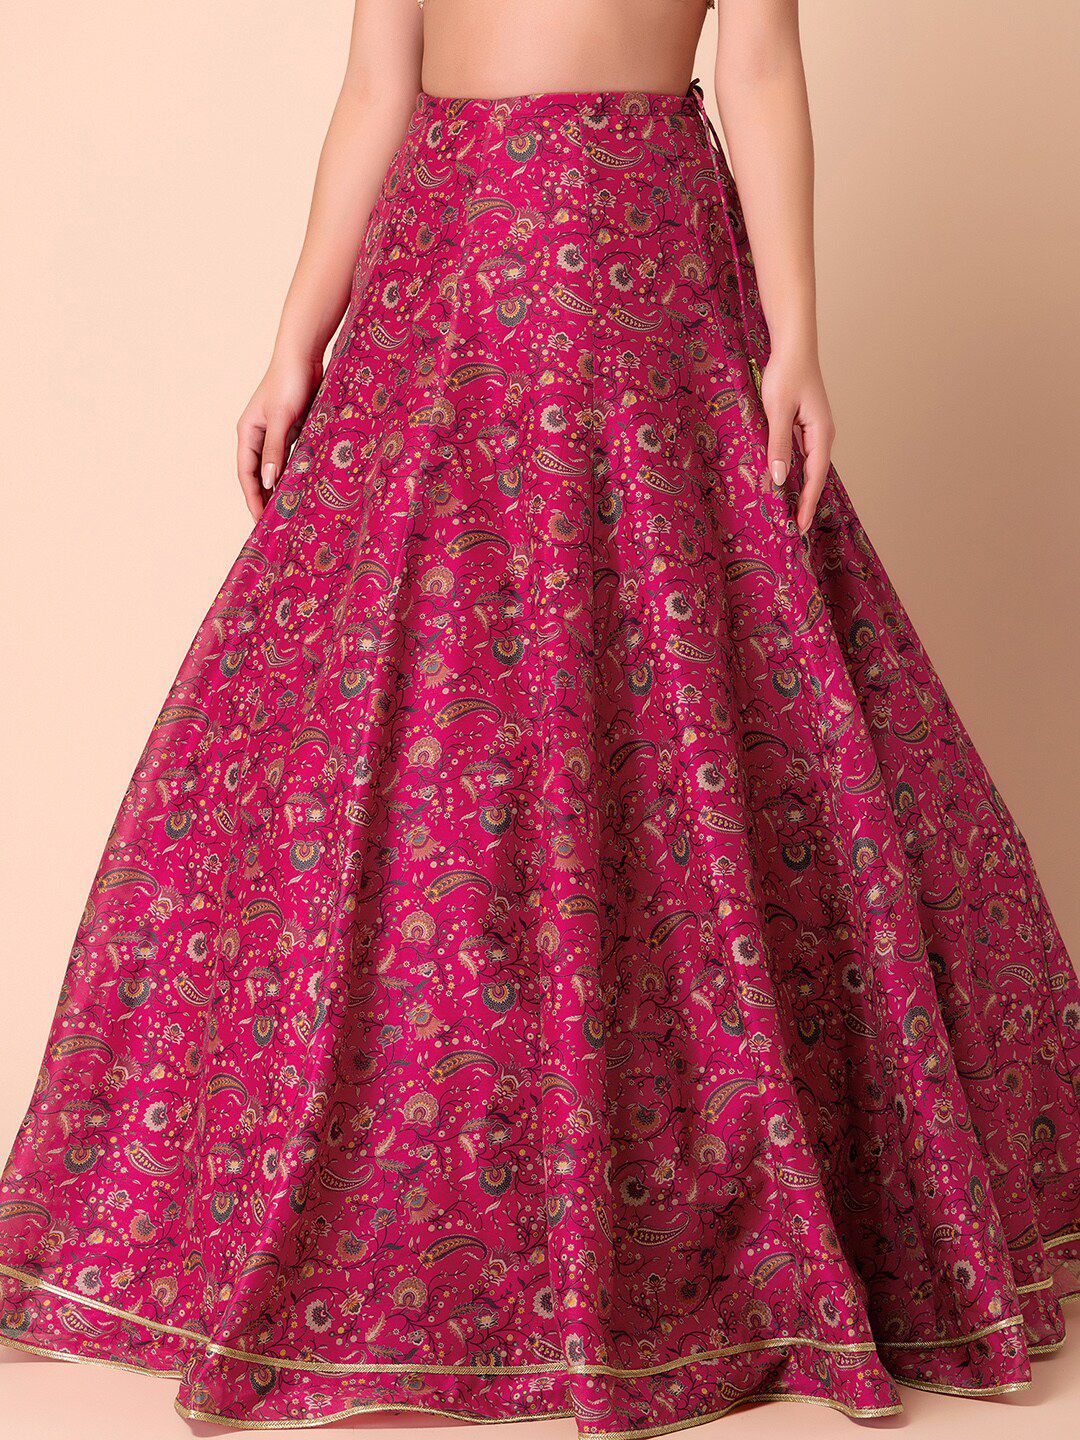 VARUN BAHL X INDYA Printed Lehenga Skirt With Cancan Price in India